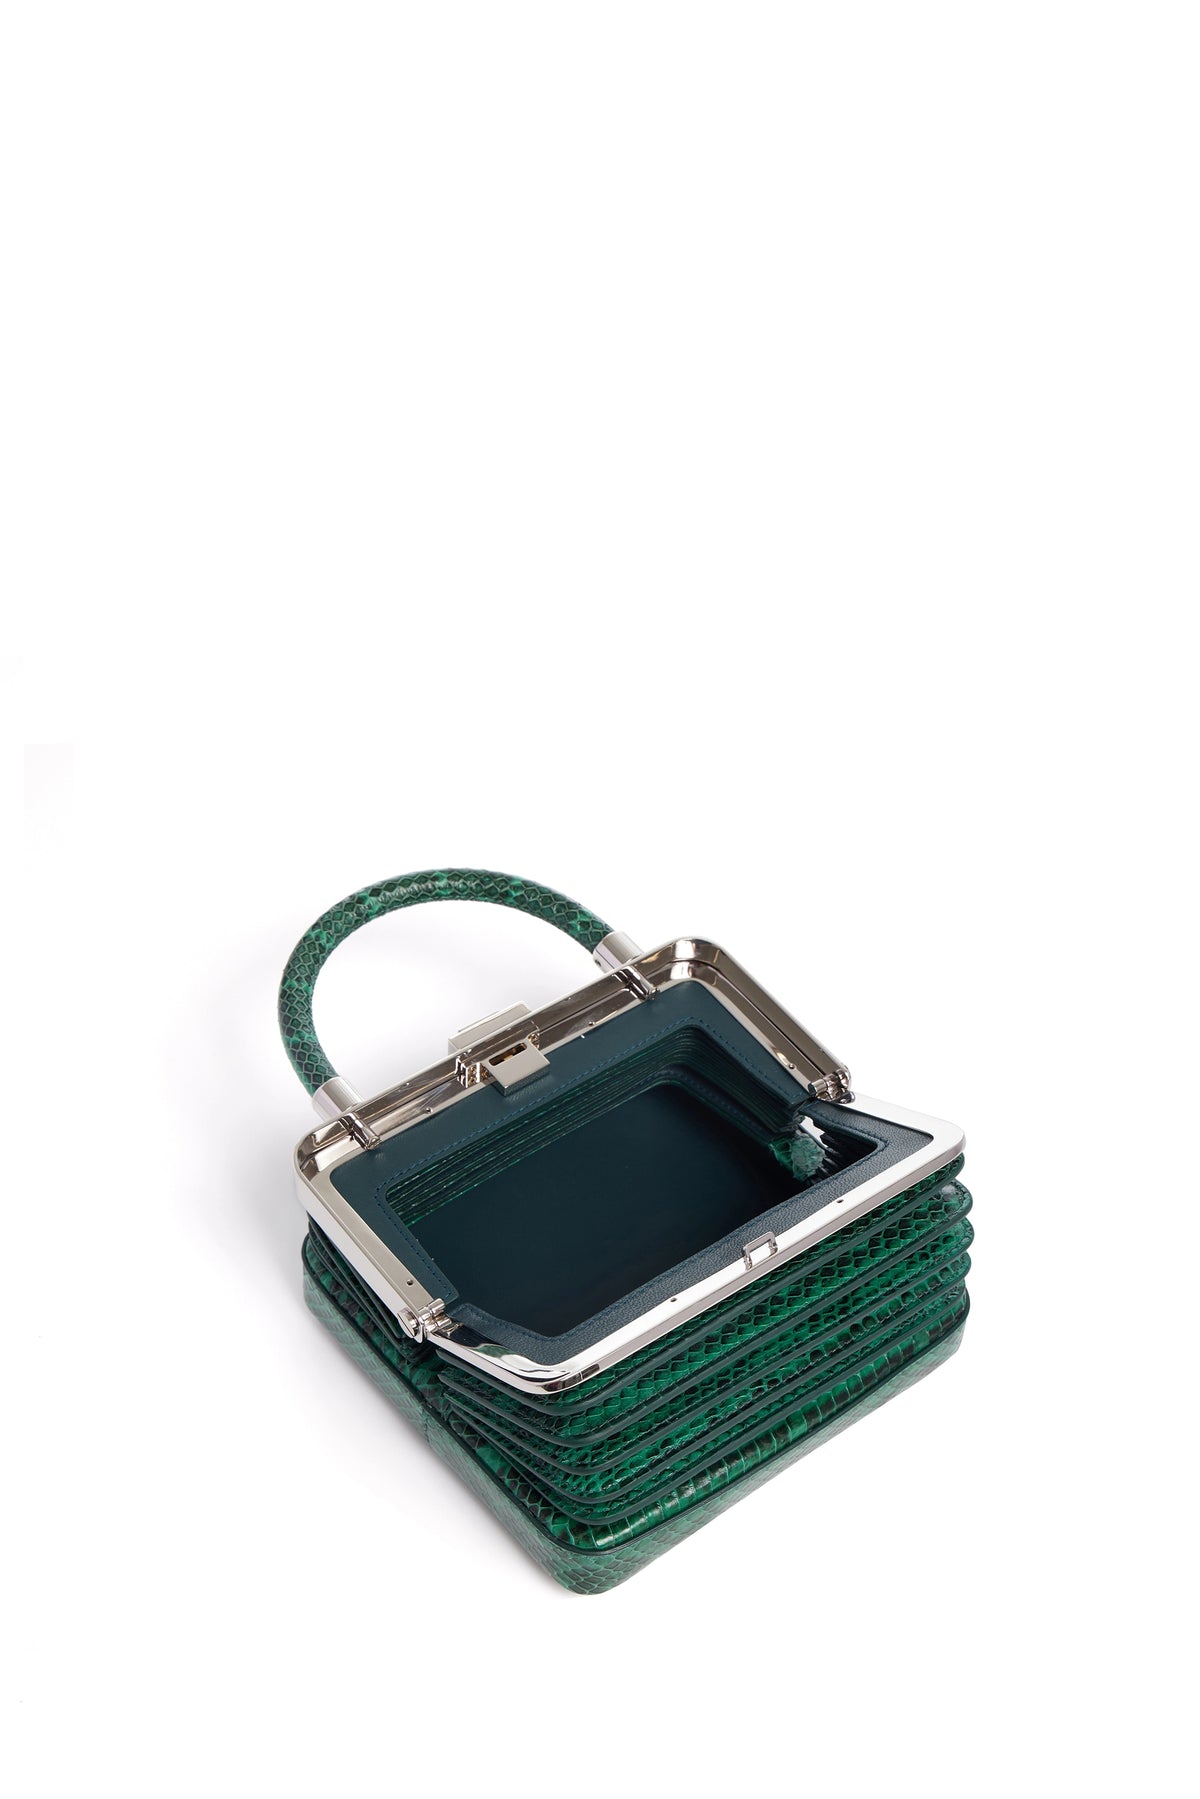 Small Diana Bag in Emerald Snakeskin